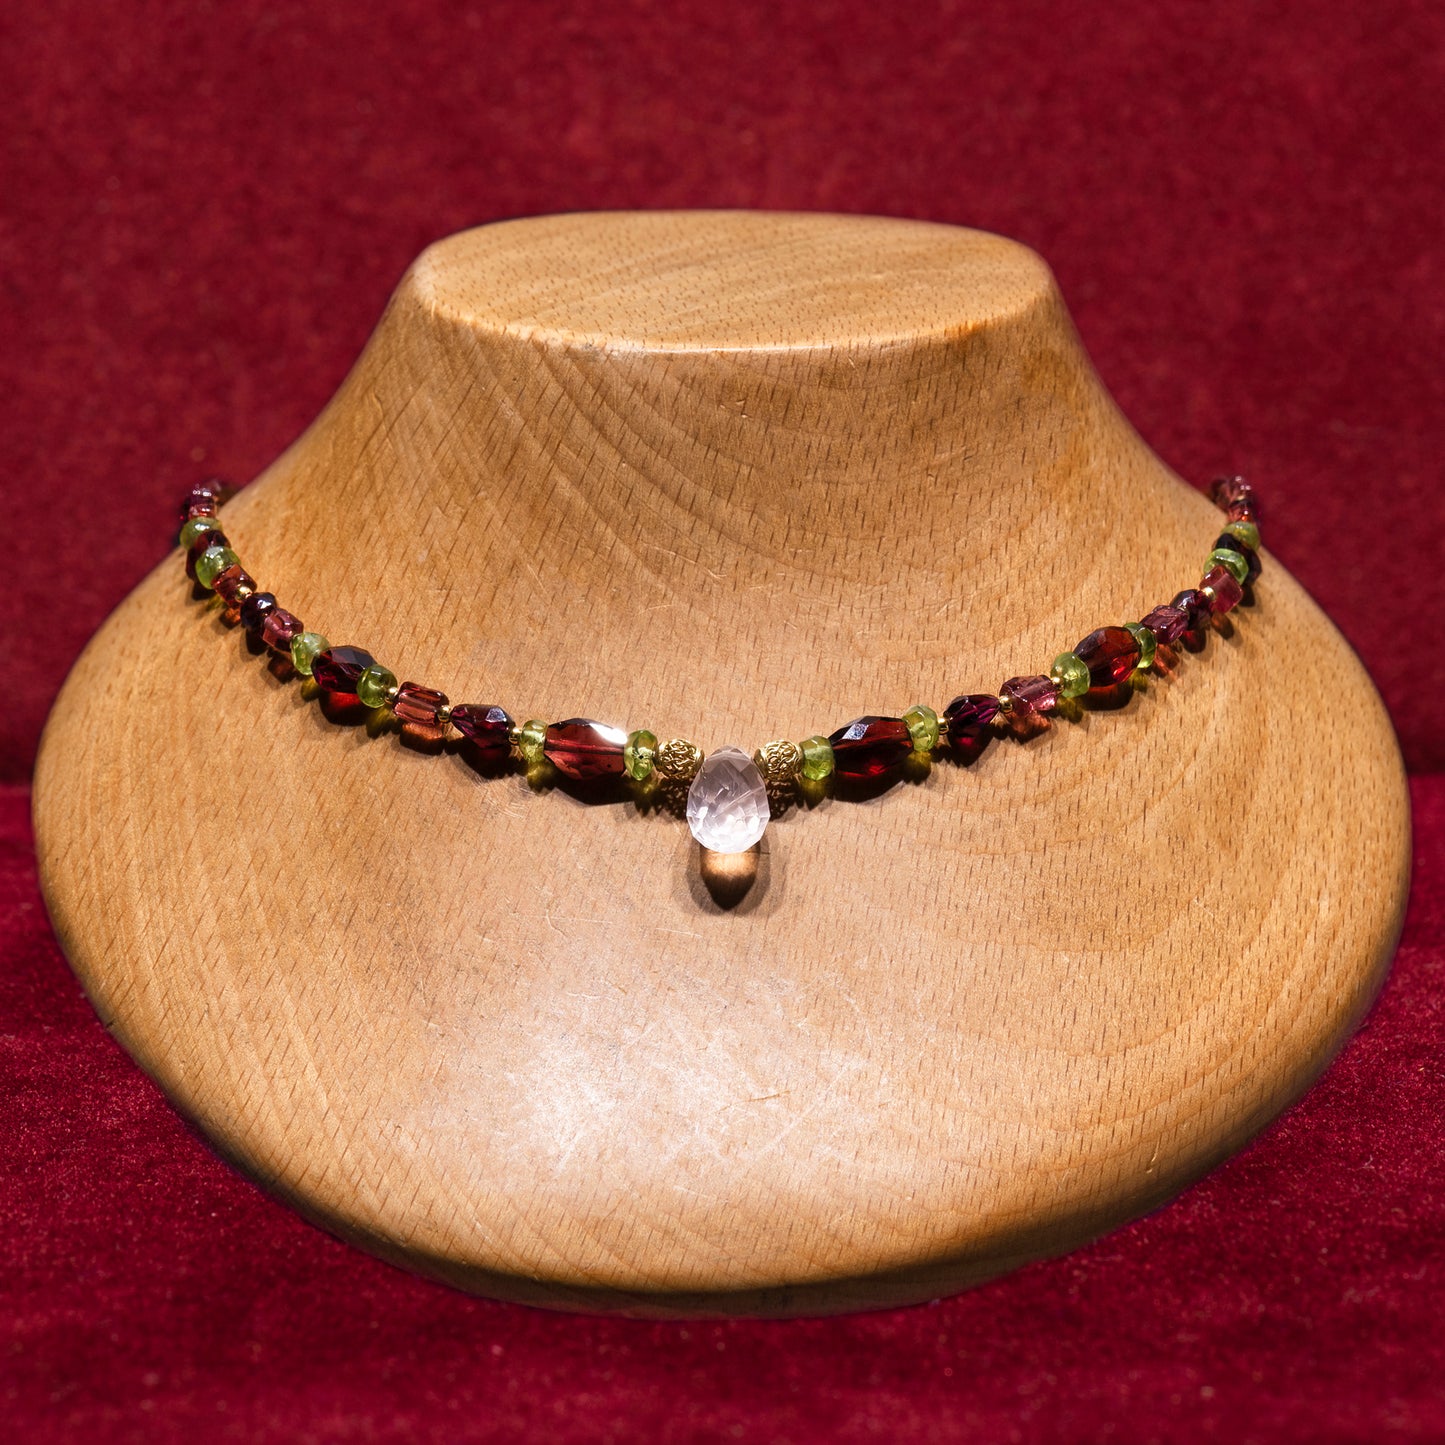 Garnets,peridots,rose quartz and 18k gold necklace.